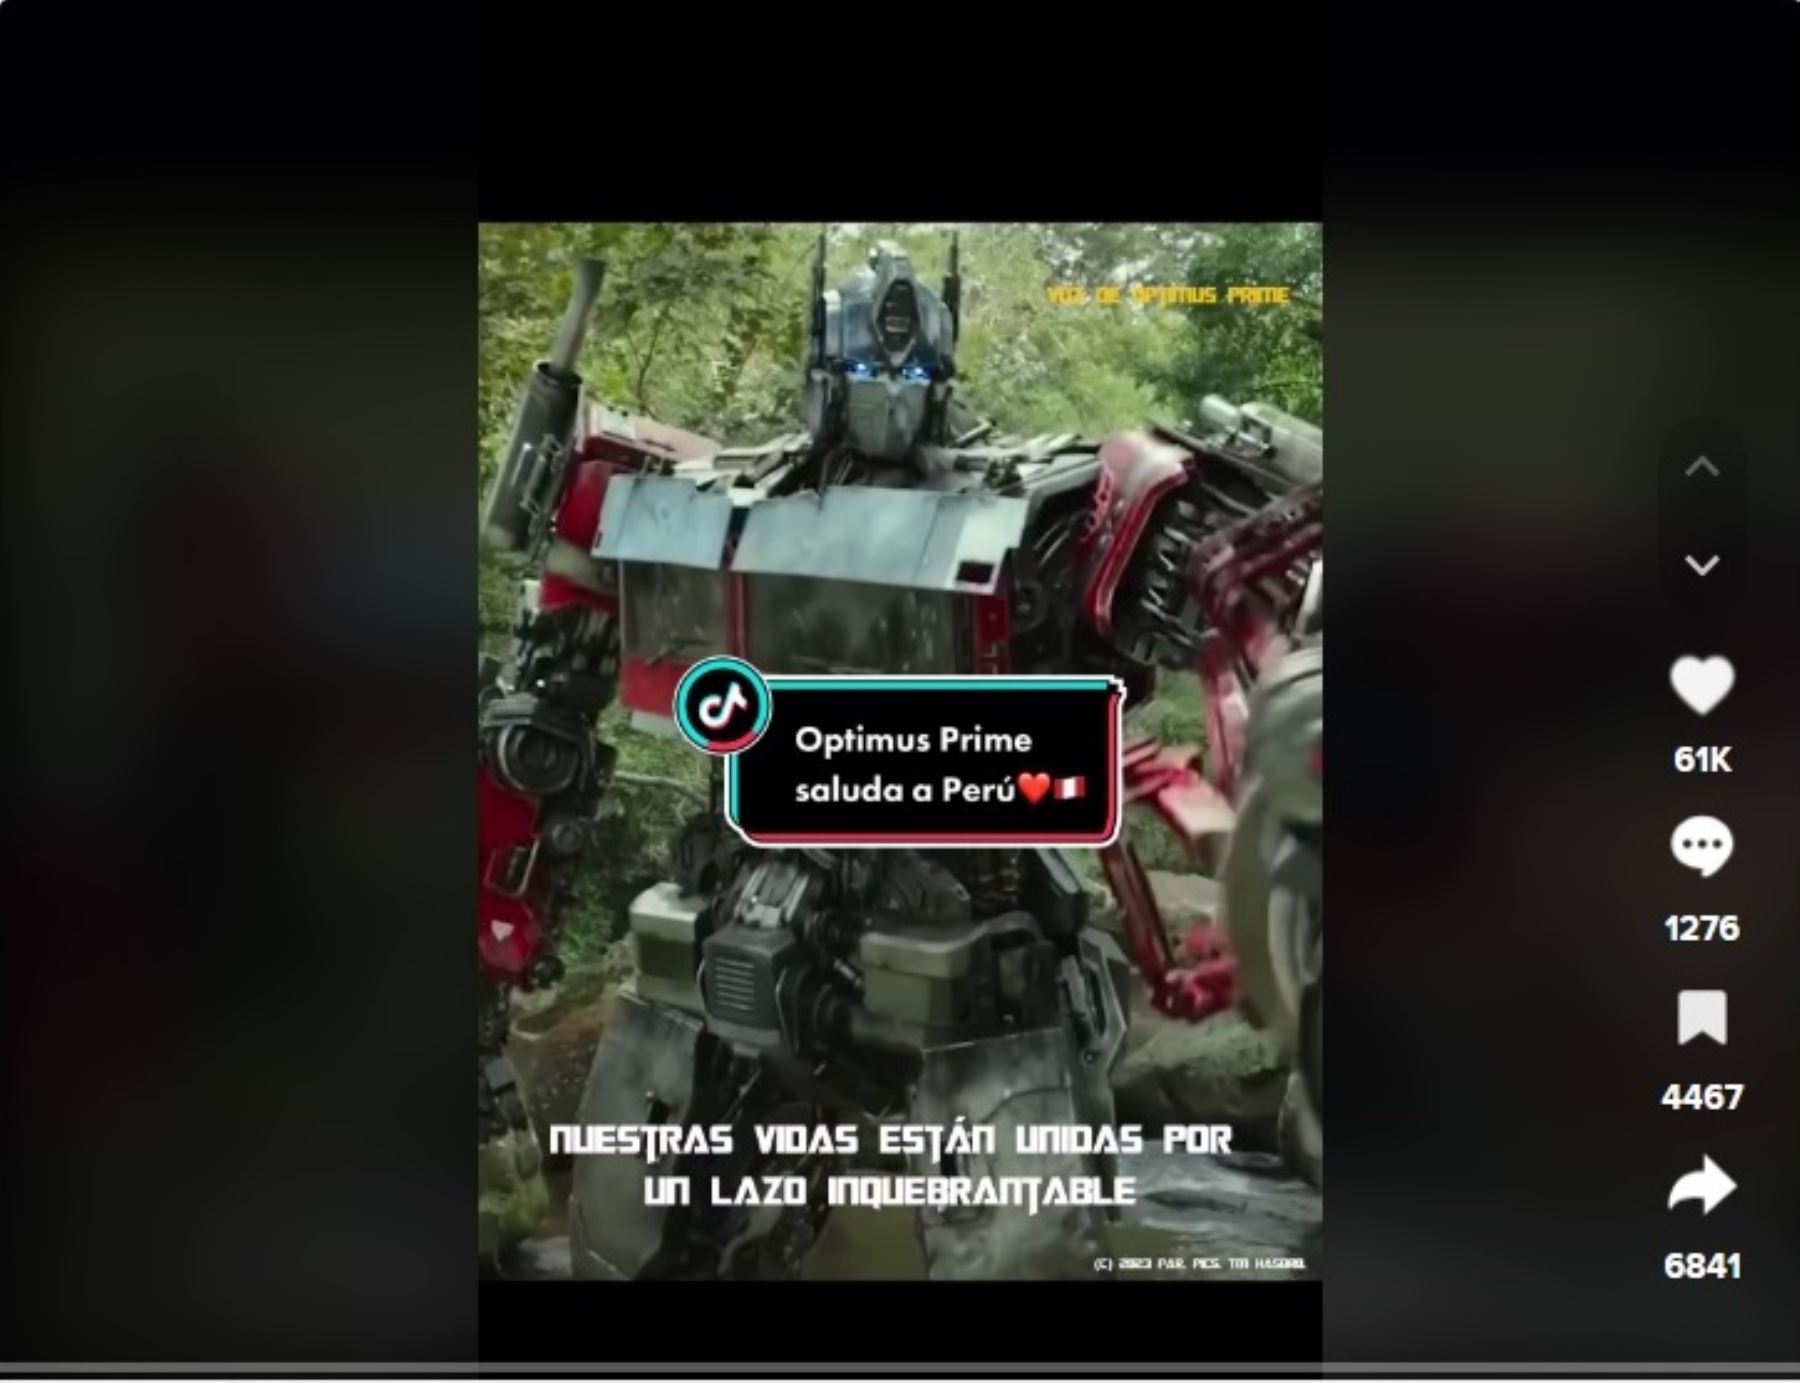 Optimus Prime envió saludo especial en quechua, destacó Promperú en sus redes sociales. Foto: Captura